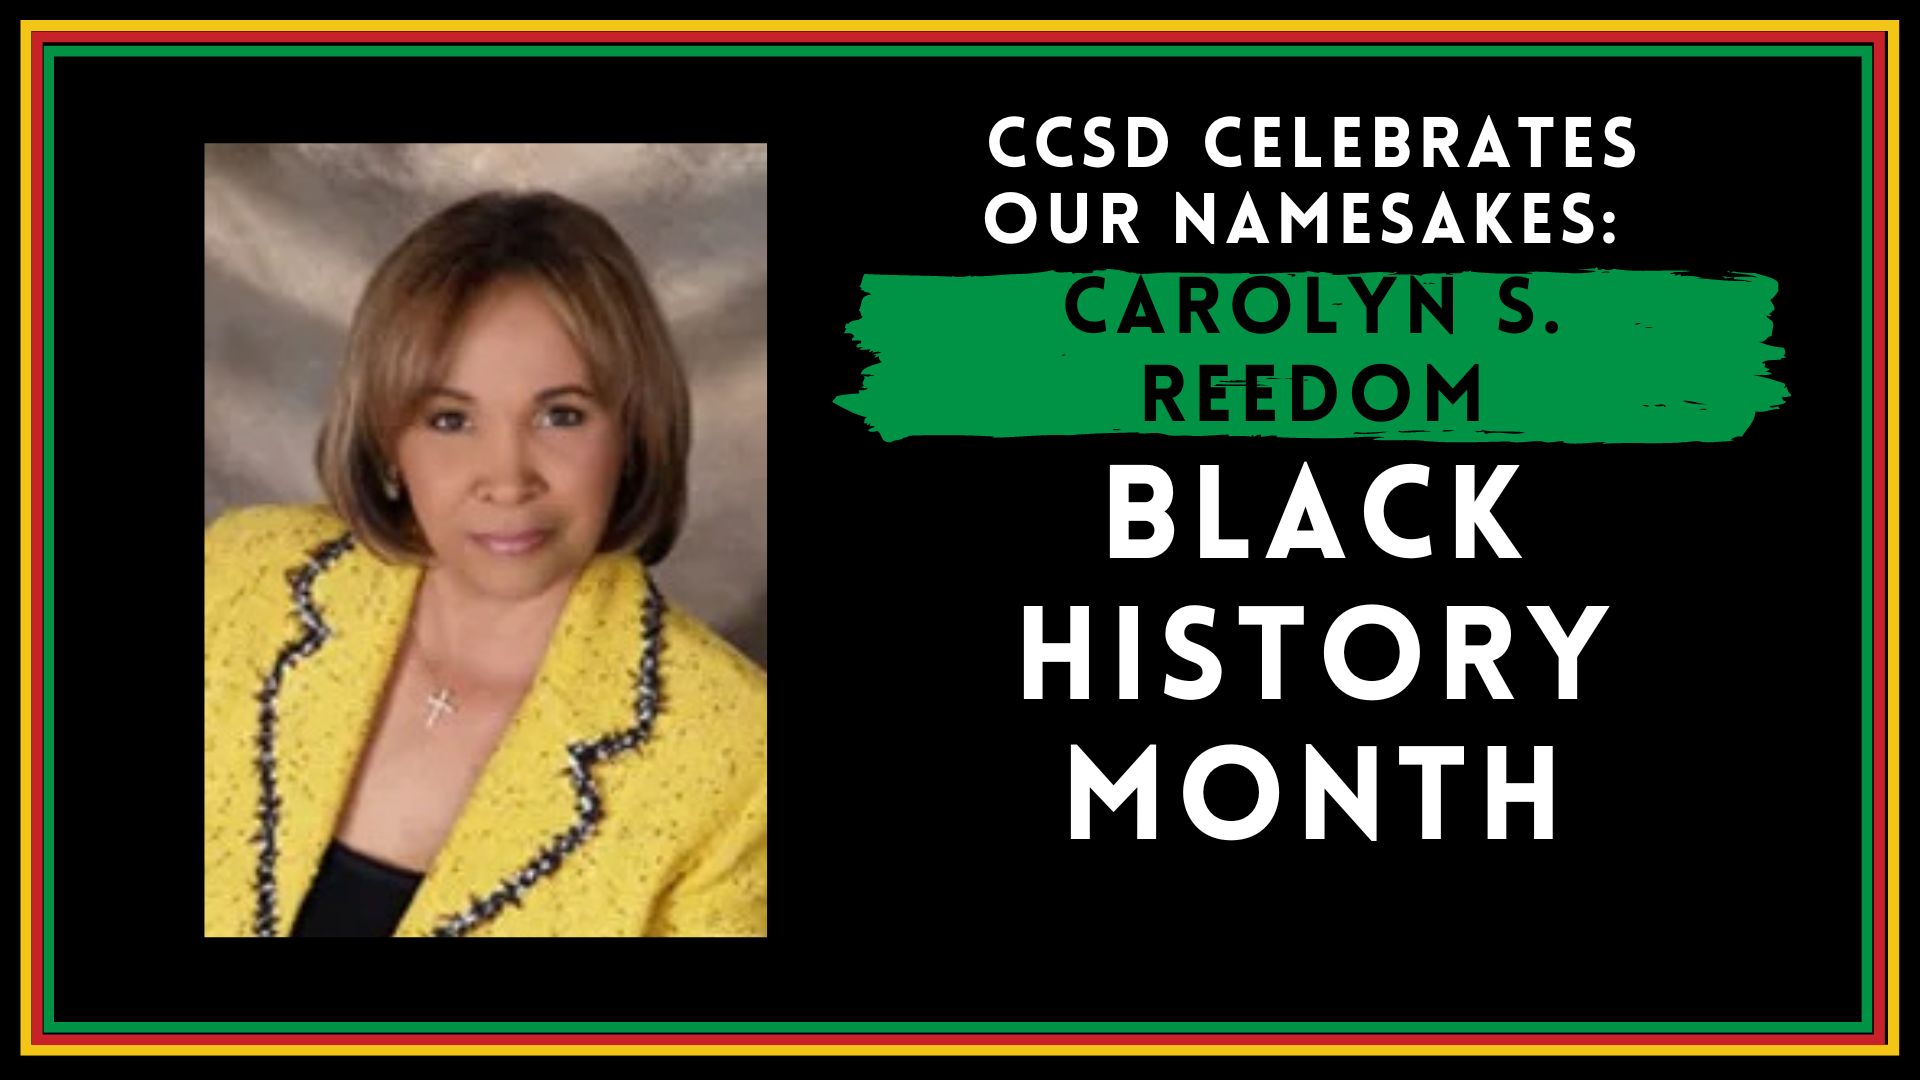 CCSD celebrates its namesakes: Dr. Carolyn S. Reedom